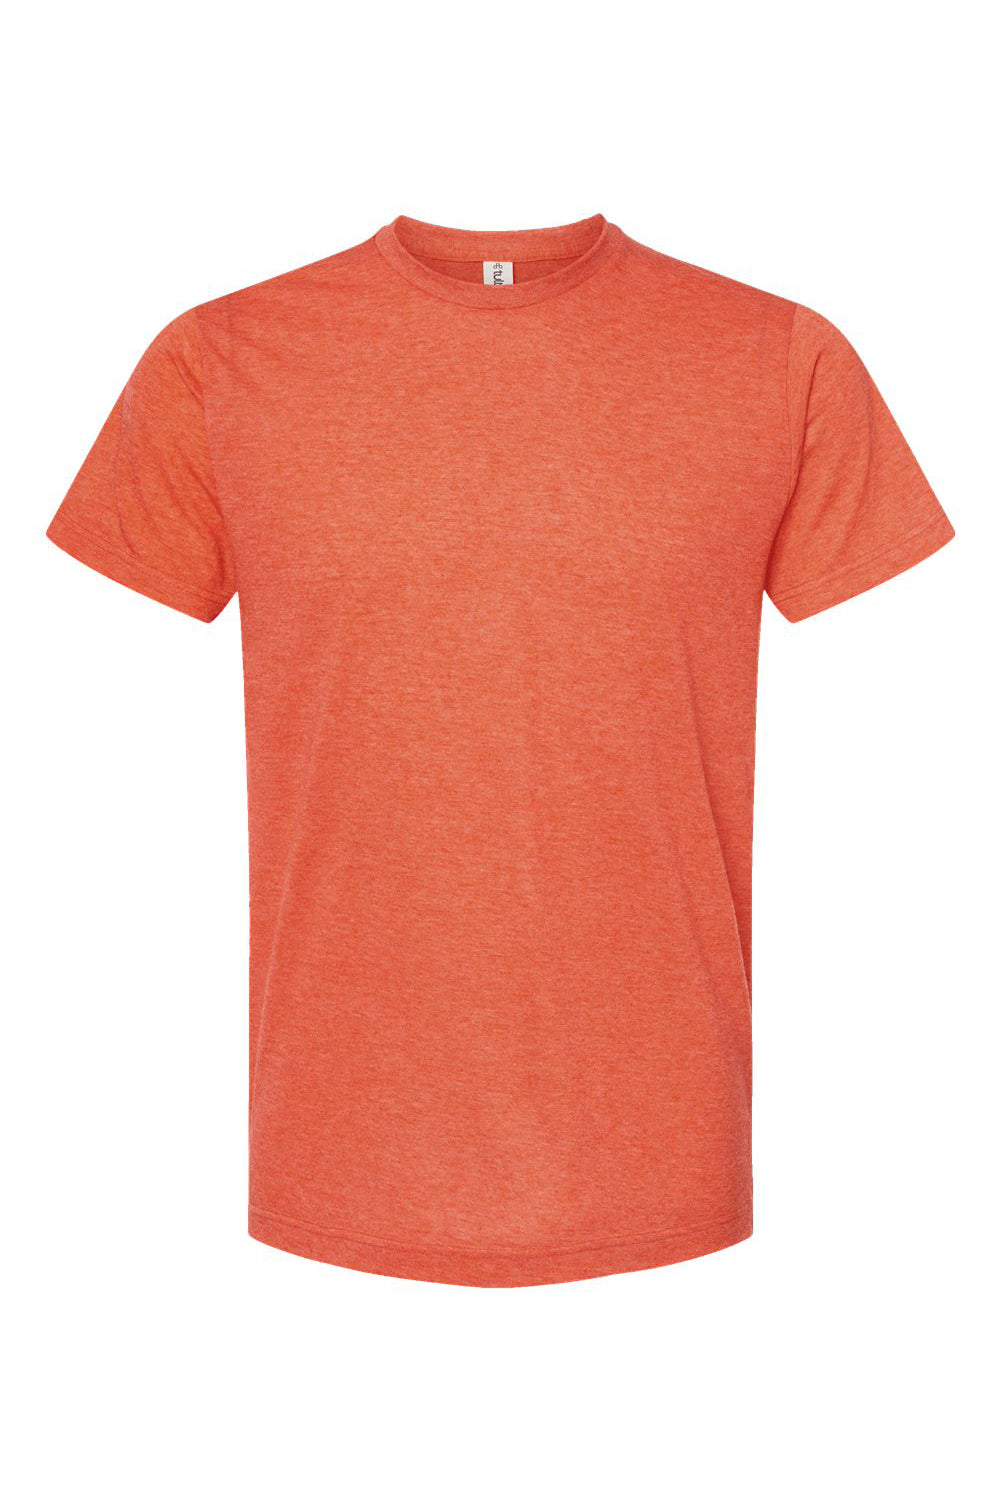 Tultex 241 Mens Poly-Rich Short Sleeve Crewneck T-Shirt Heather Orange Flat Front